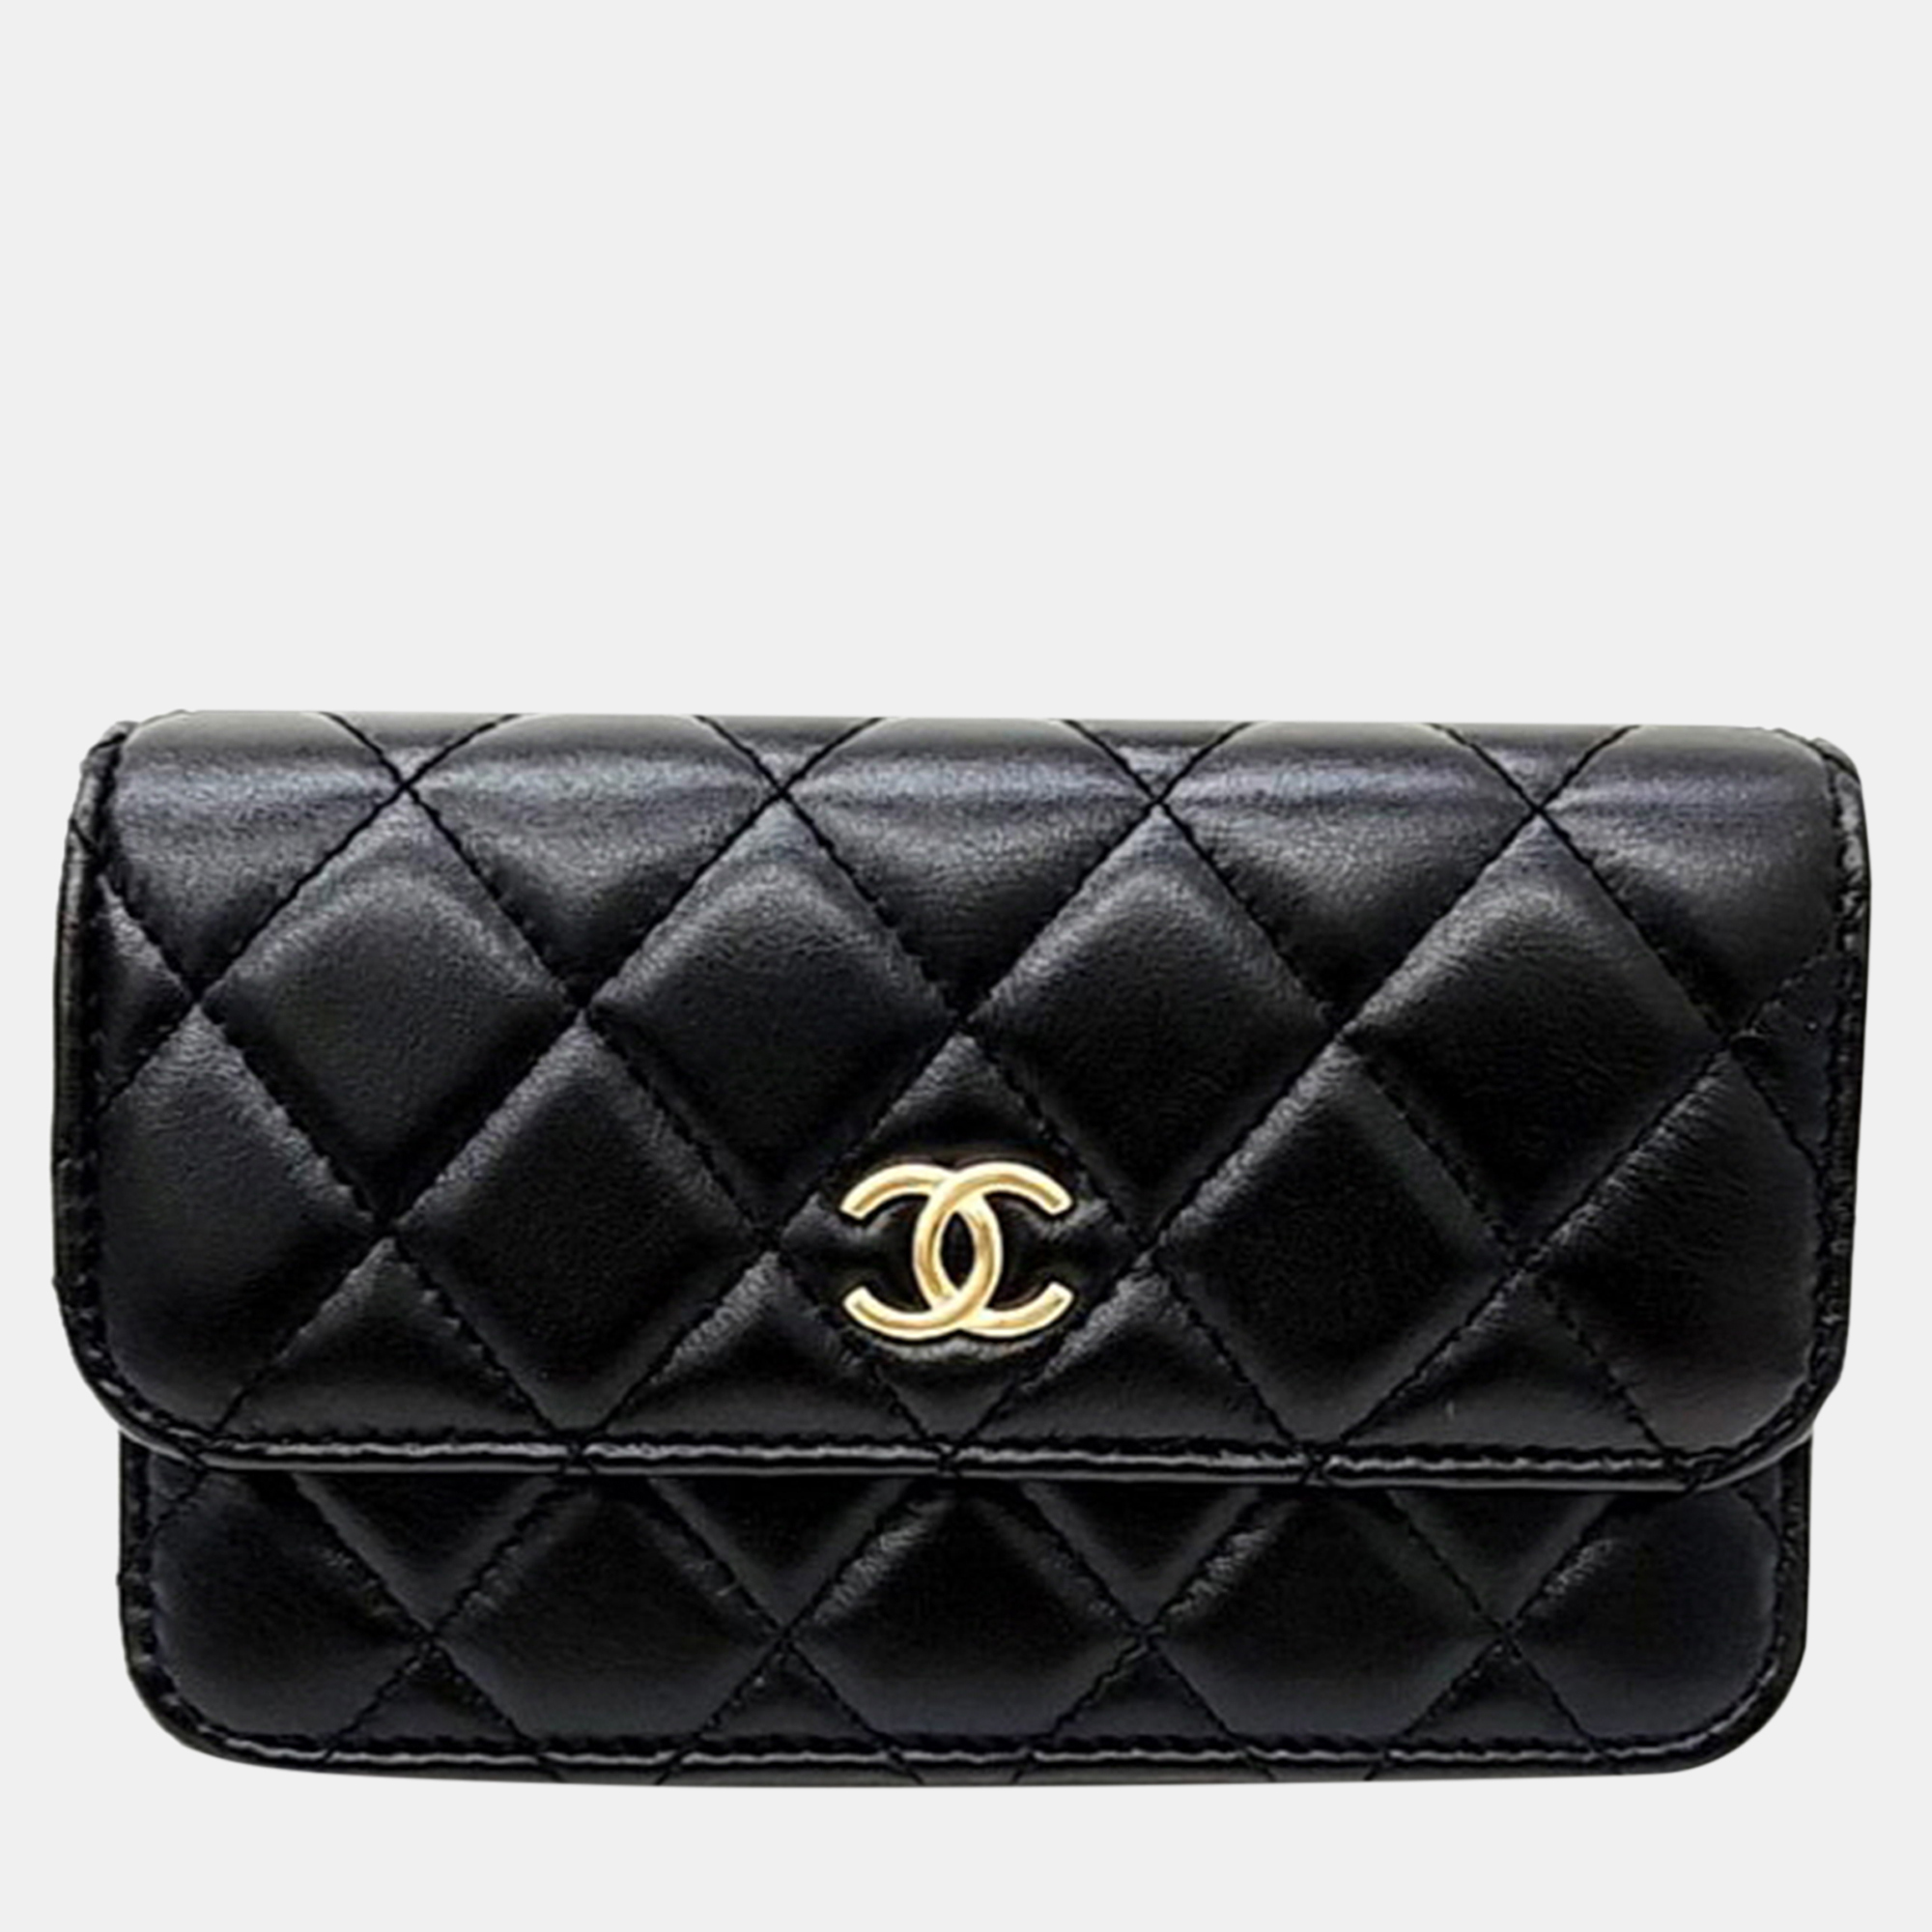 Chanel black leather pearl chain mini bag